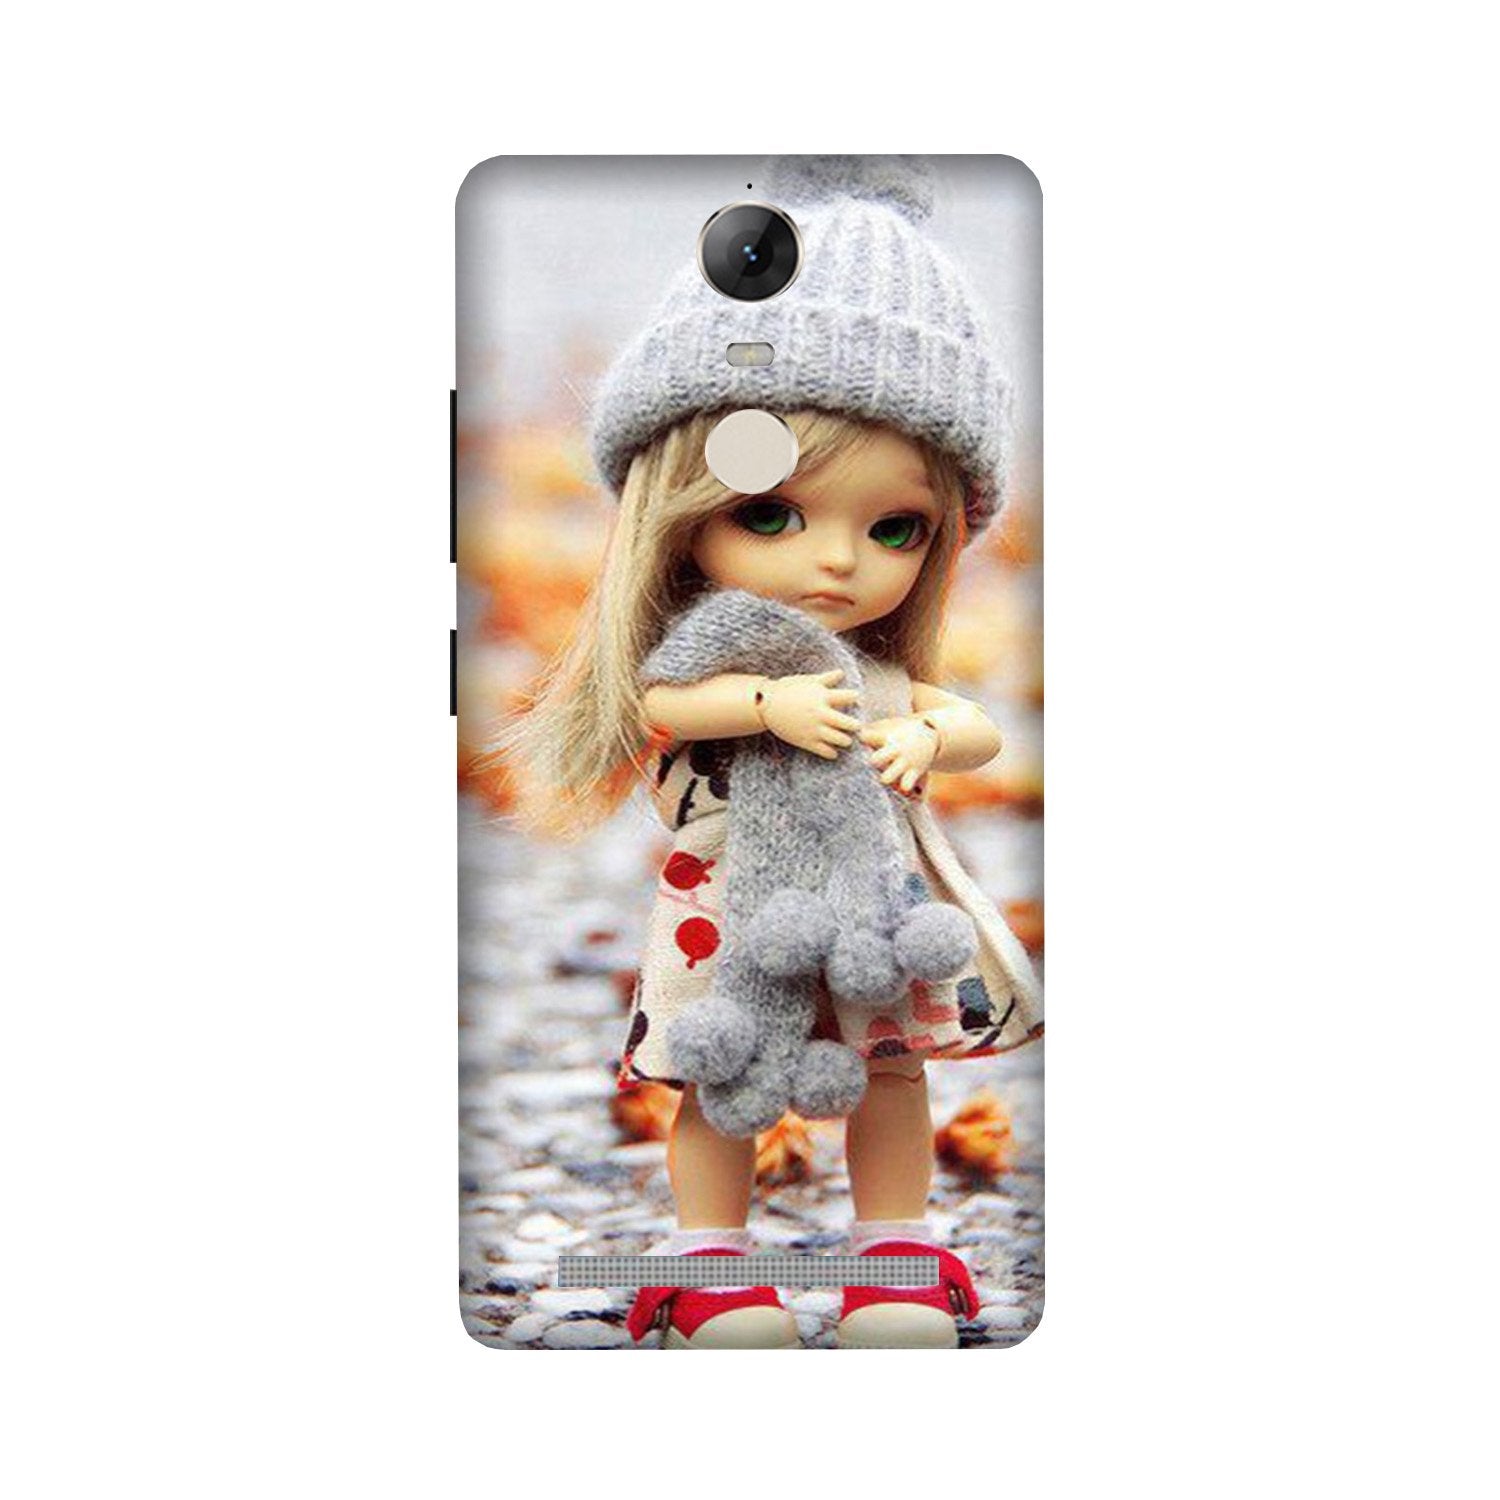 Cute Doll Case for Lenovo Vibe K5 Note